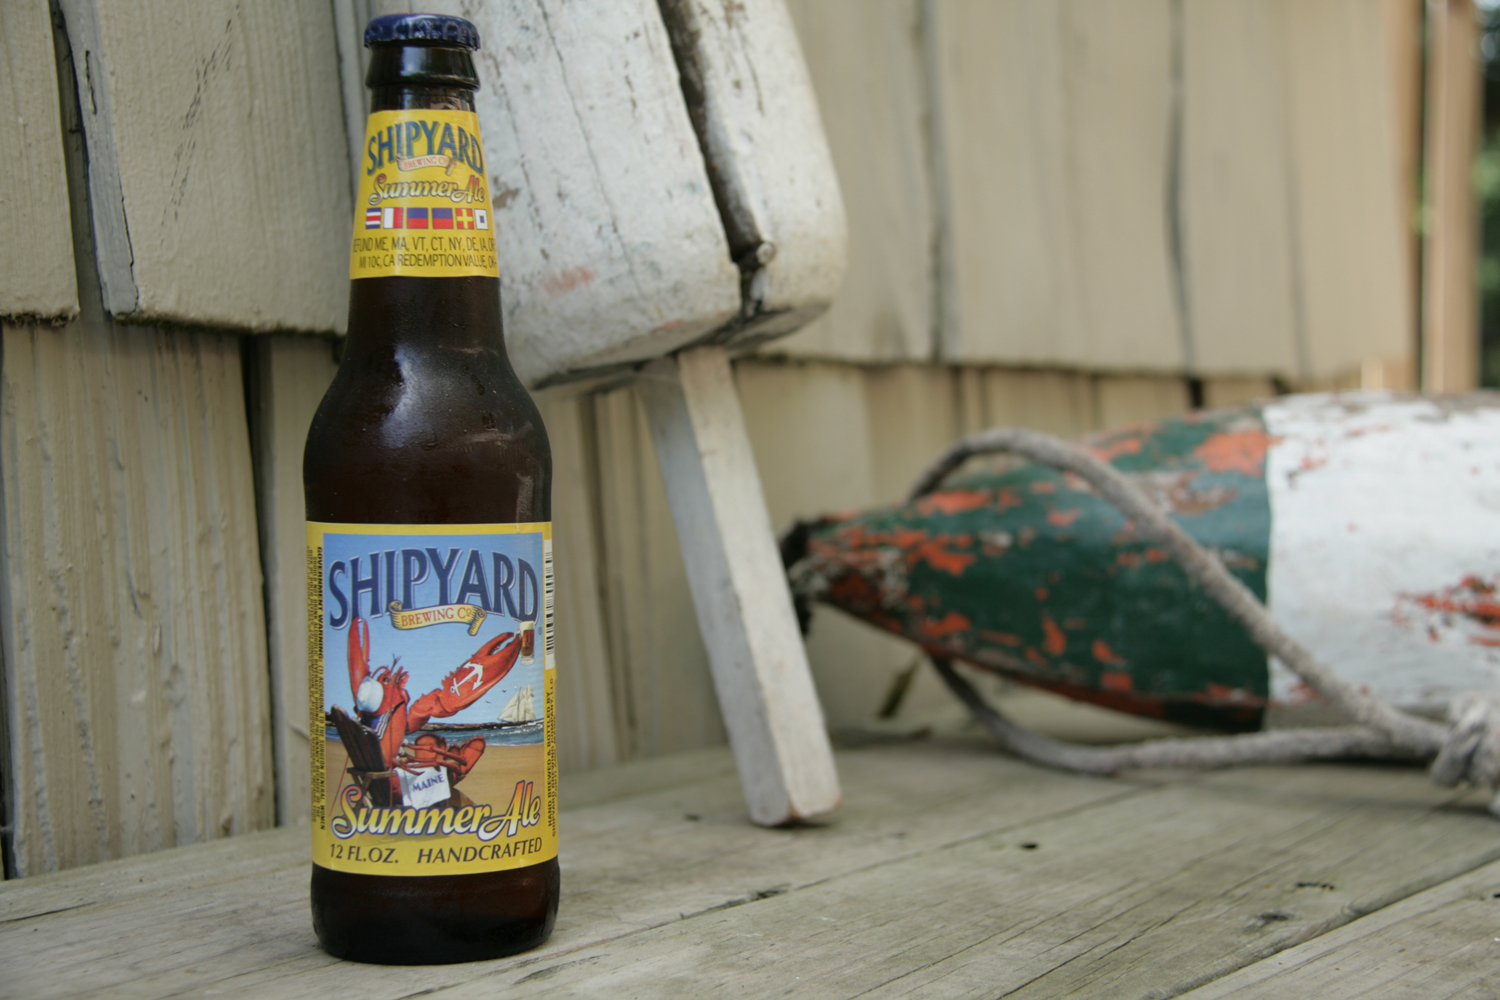 Shipyard Summer Seasonal Ale is a favorite beer for many.